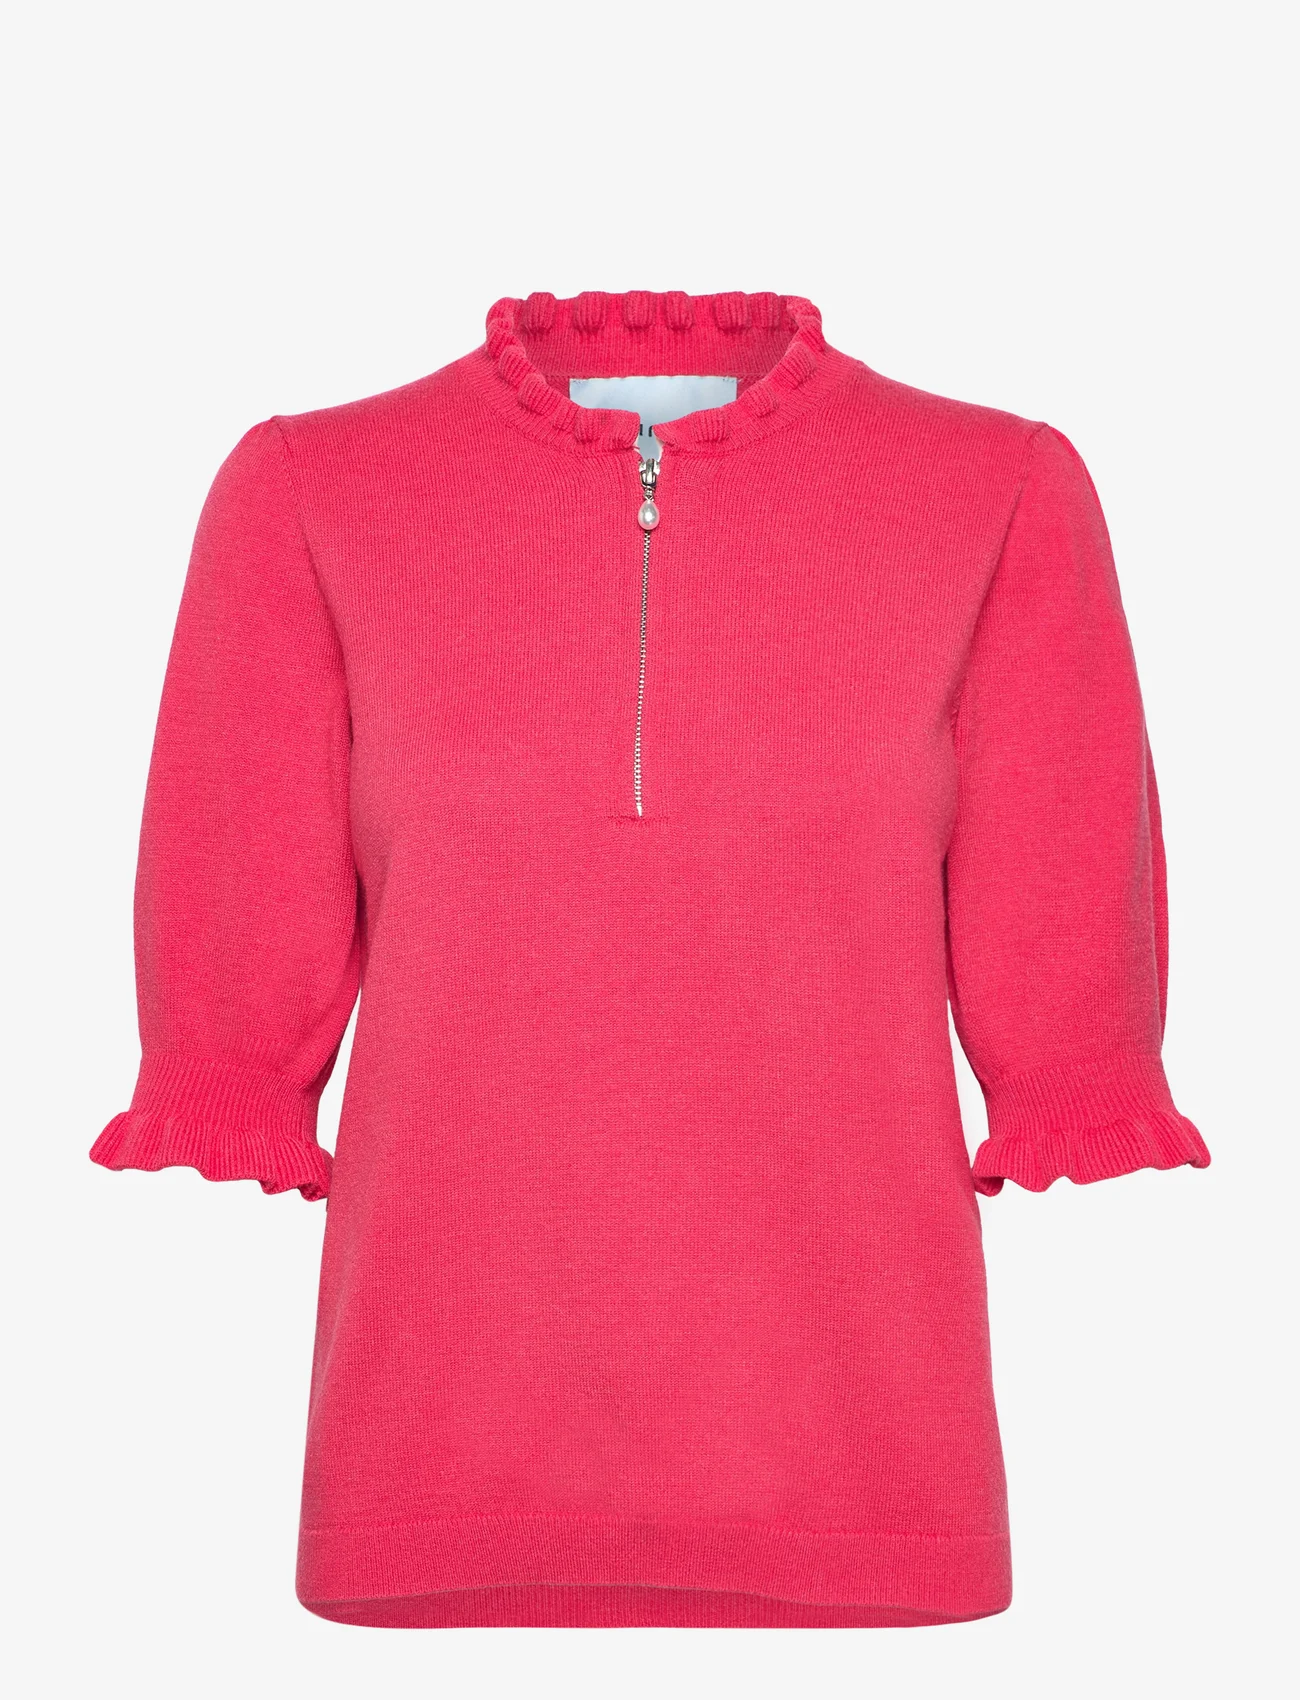 Minus - MSKessa Knit T-Shirt - truien - teaberry pink - 0